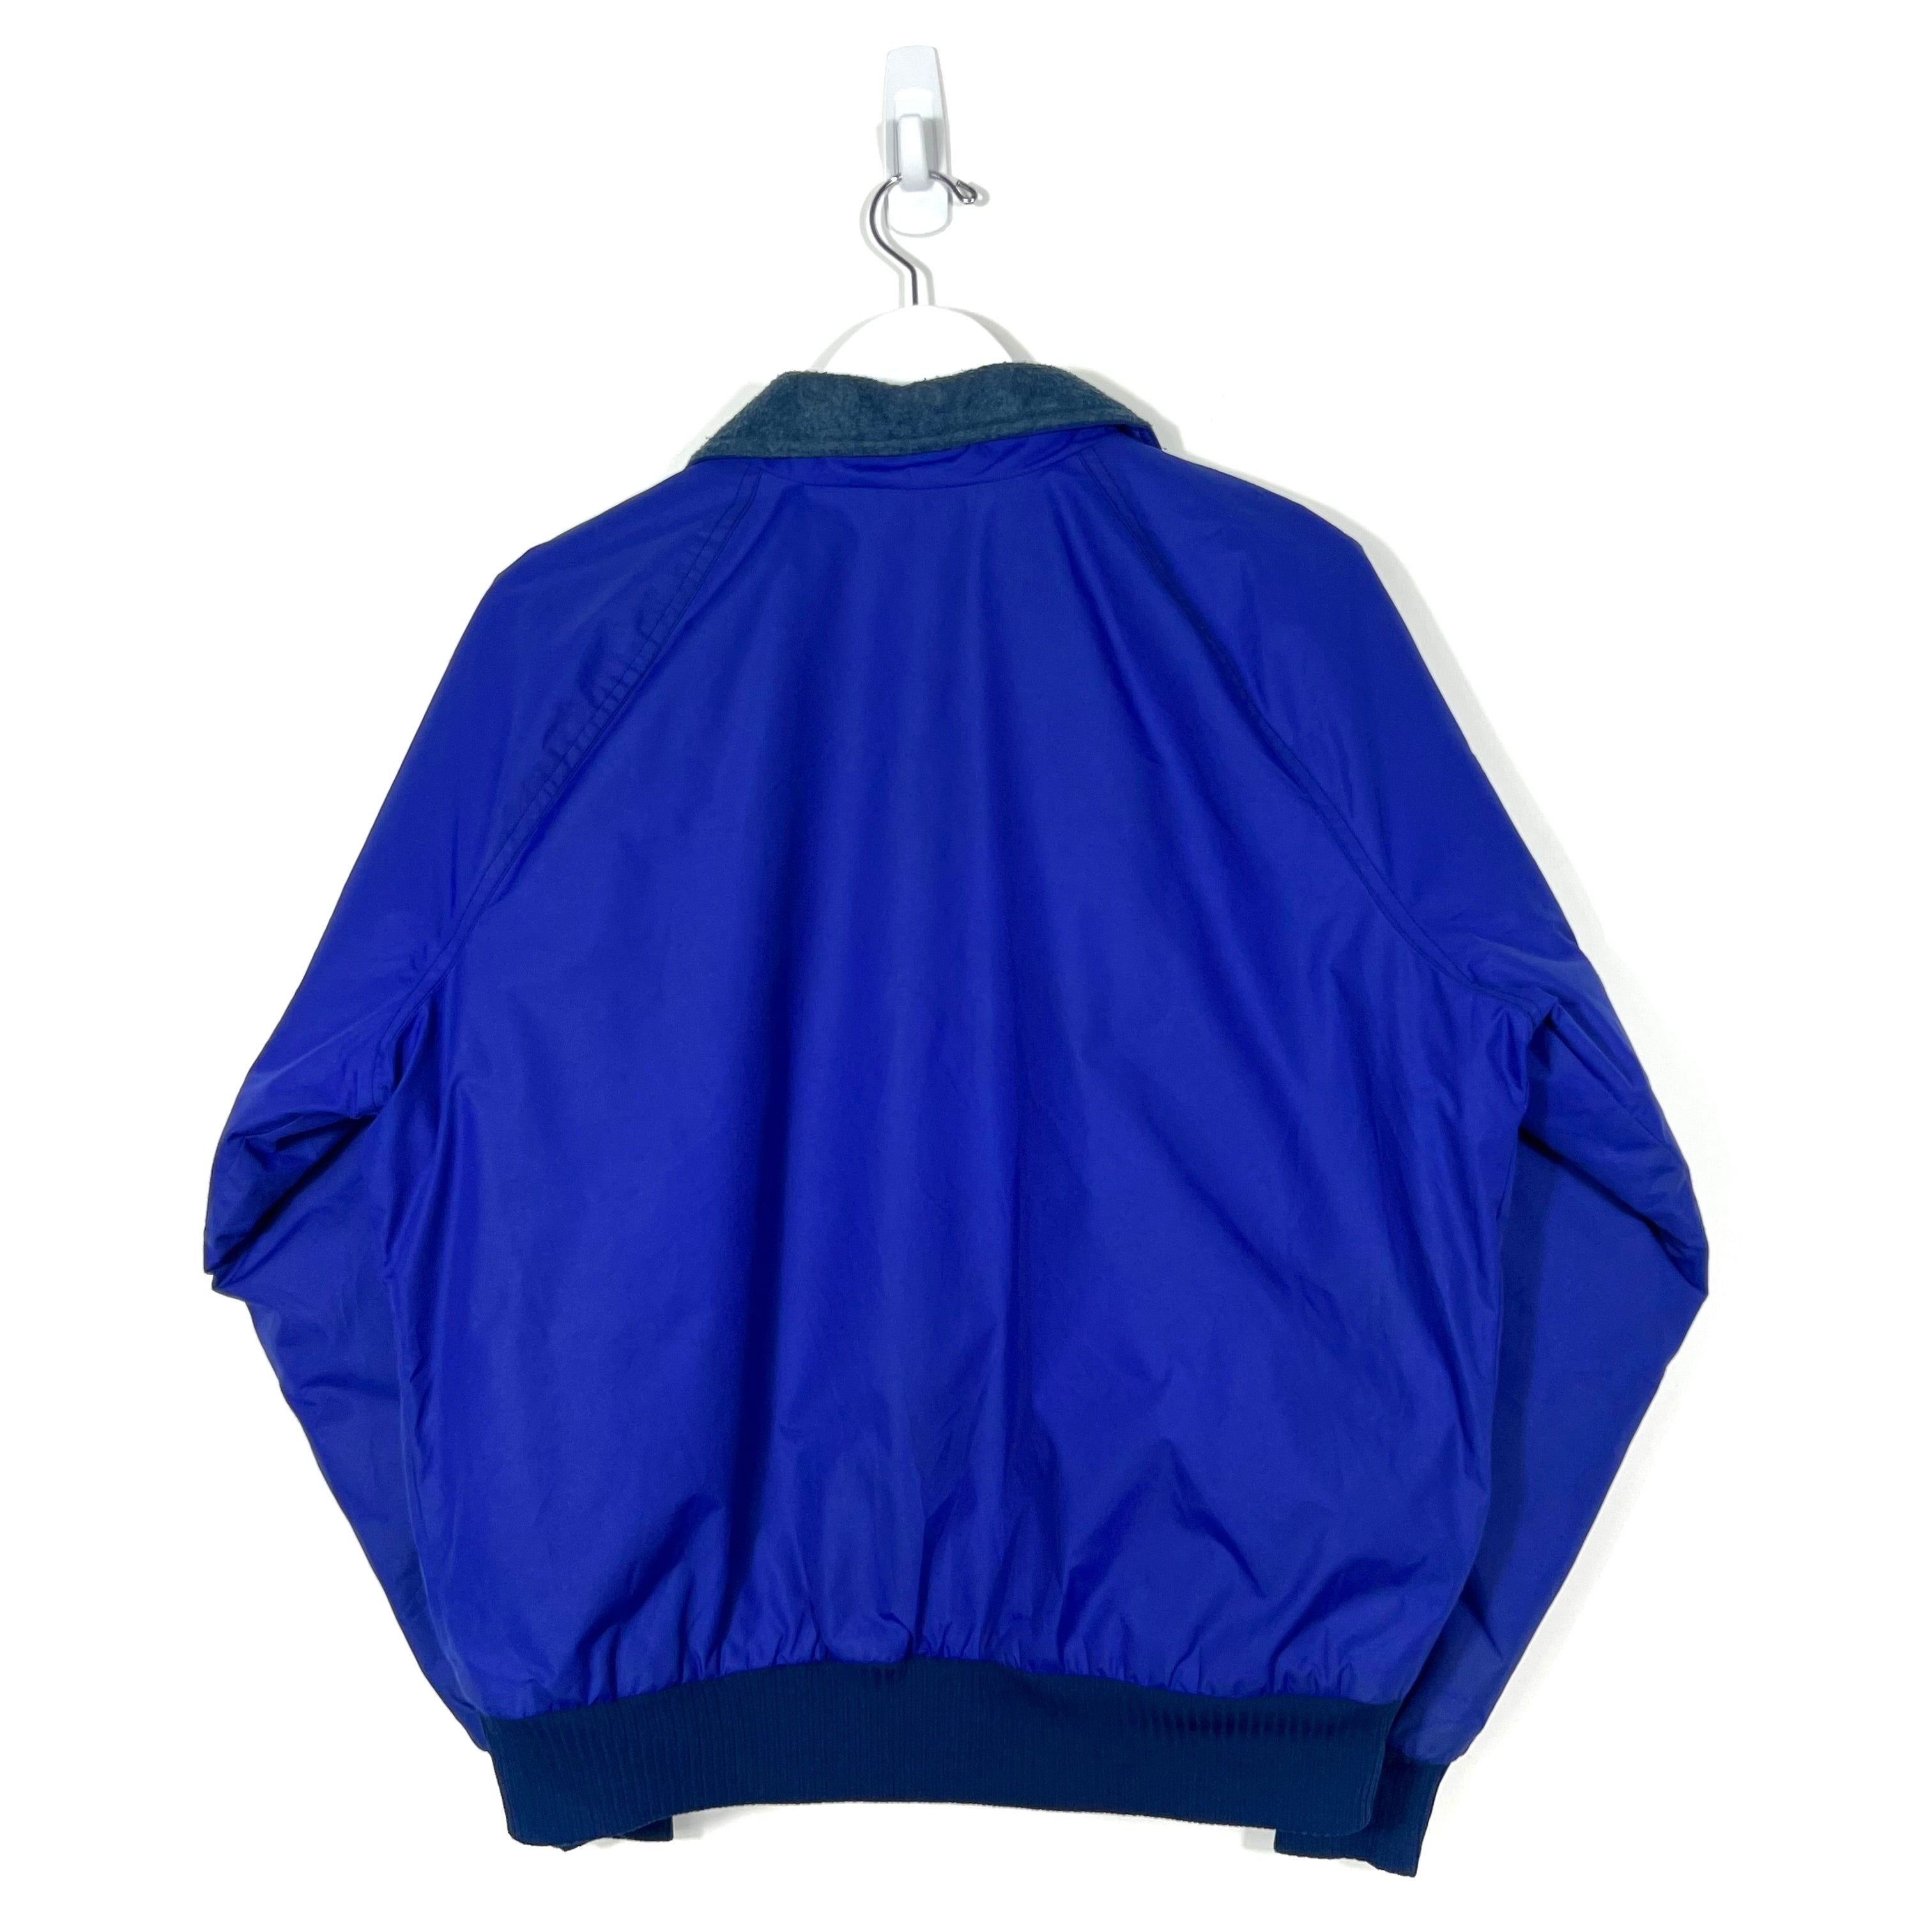 Vintage Patagonia Fleece Lined Lightweight Jacket - Women's Medium